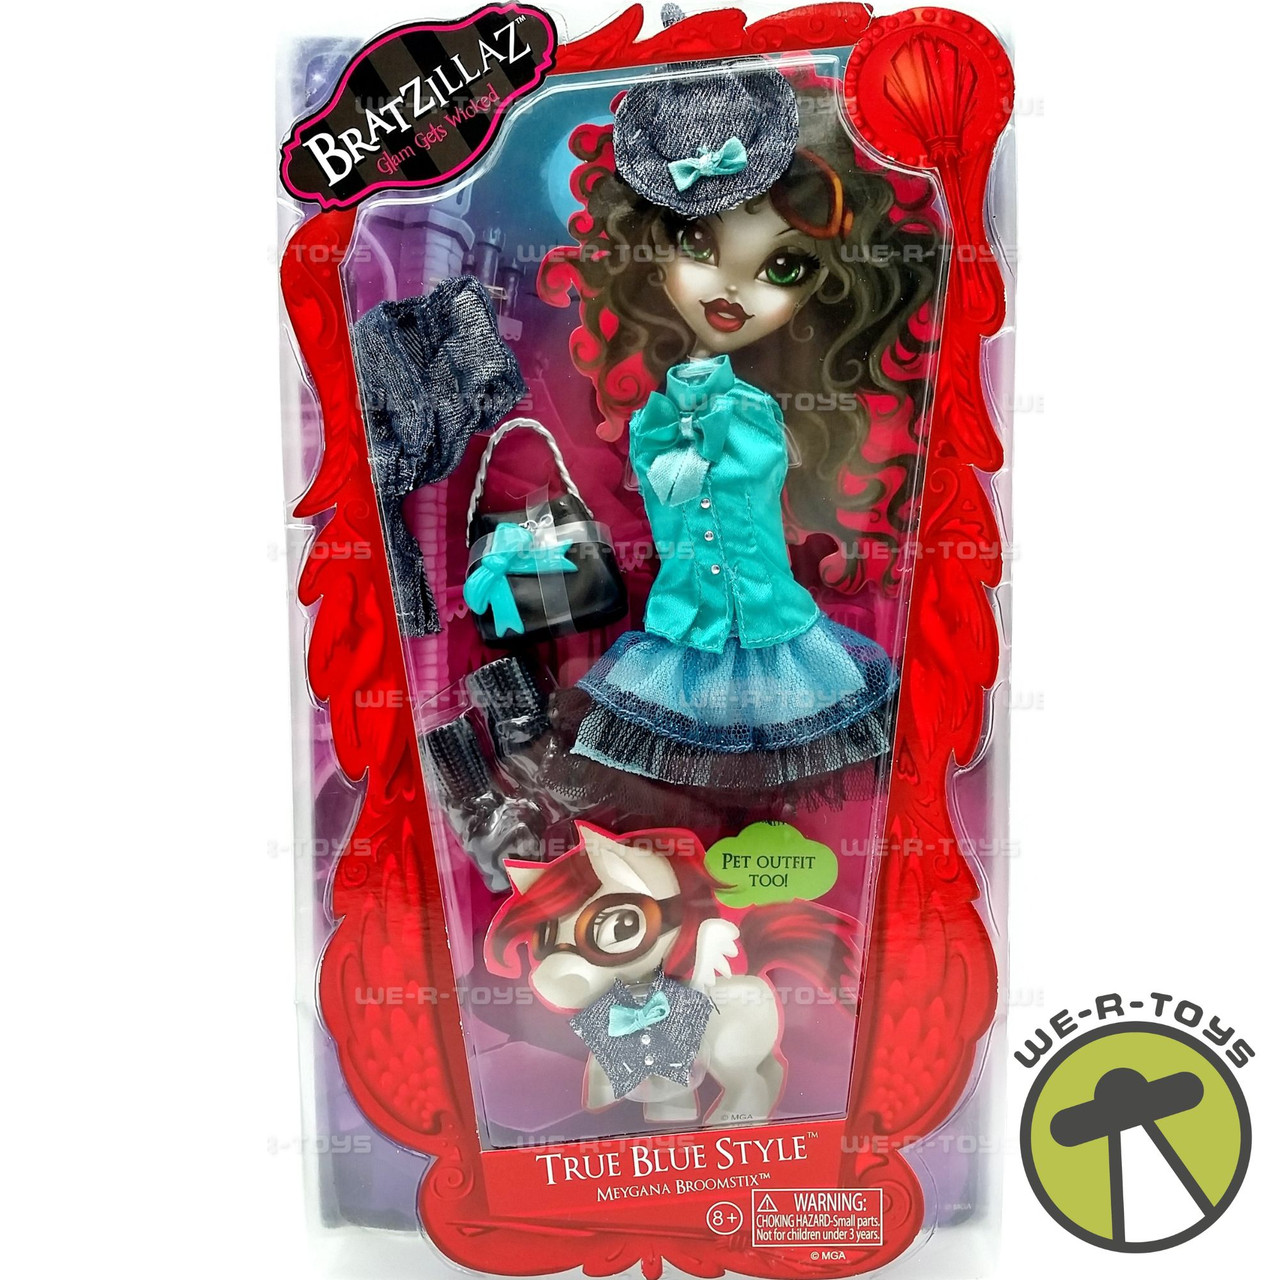 Bratzillaz Meygana Broomstix - Meygana Broomstix . Buy Doll toys